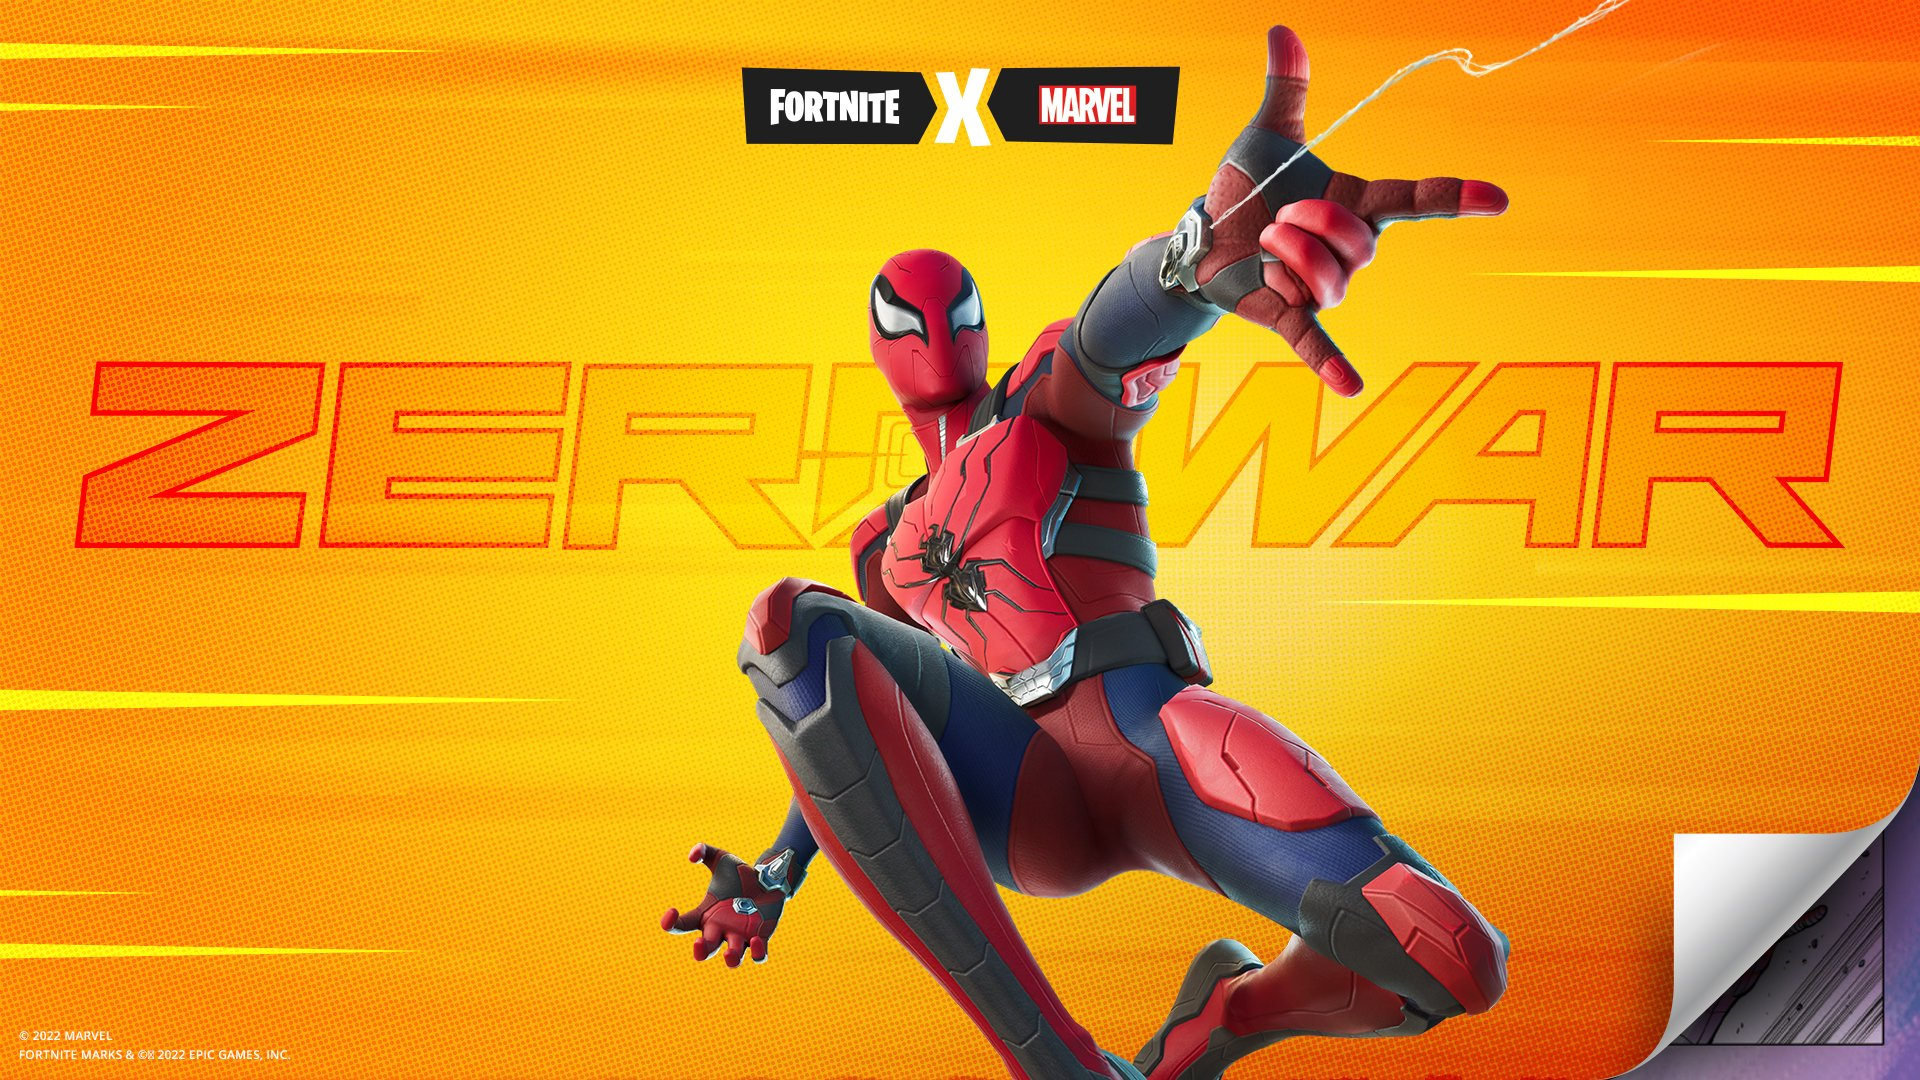 Marvel's Spider-Man has arrived in Fortnite (again)